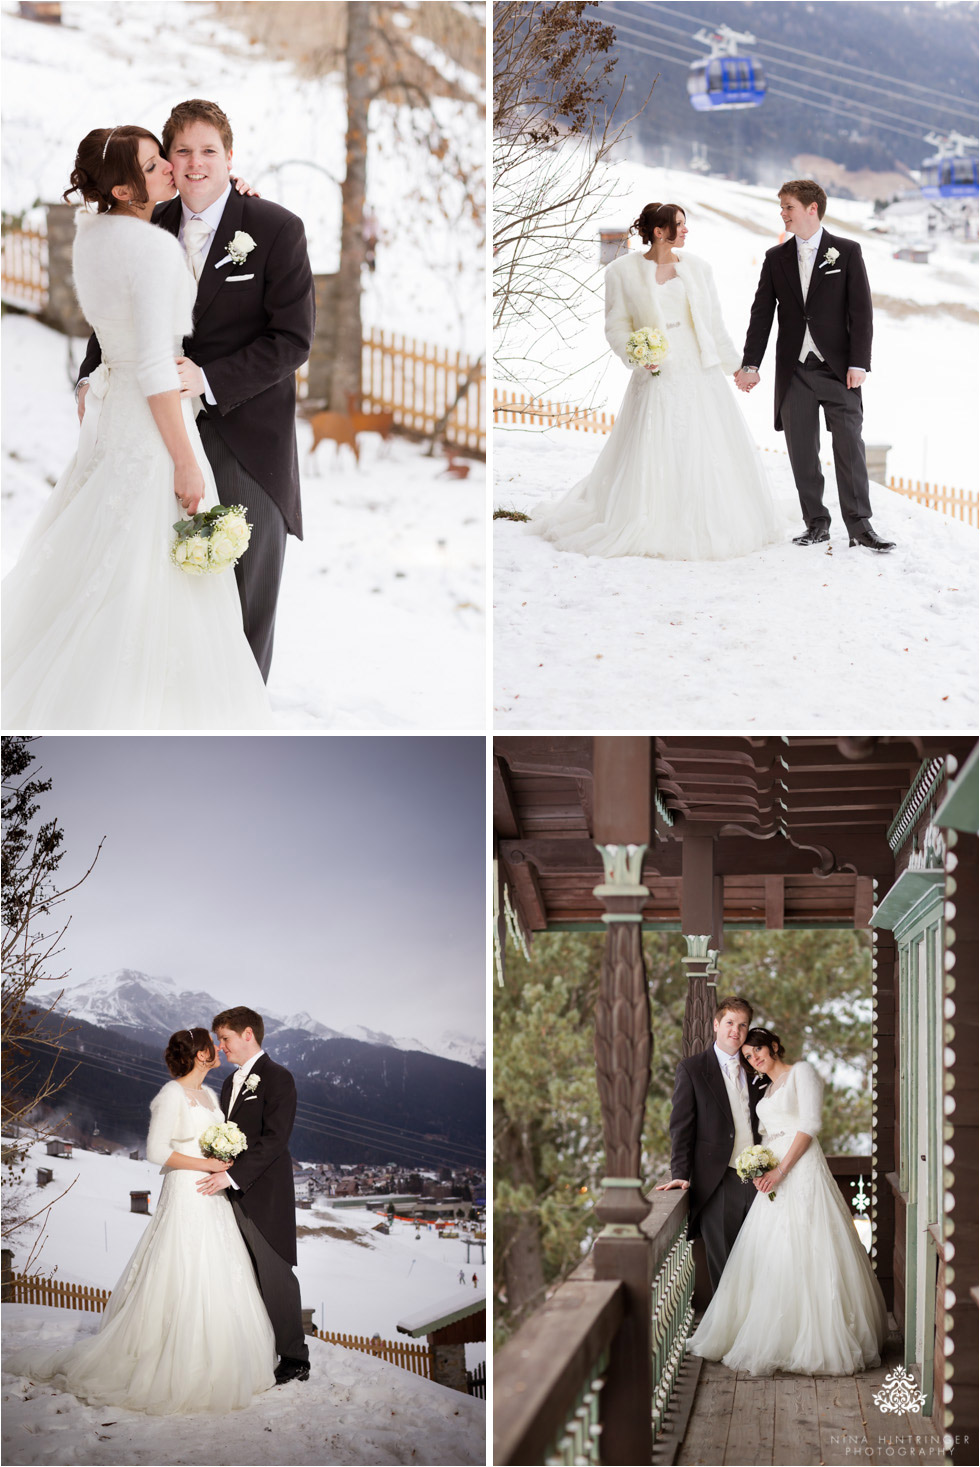 Winter Wedding in St. Anton, Arlberg | UK meets Austria | Helen & James - Blog of Nina Hintringer Photography - Wedding Photography, Wedding Reportage and Destination Weddings